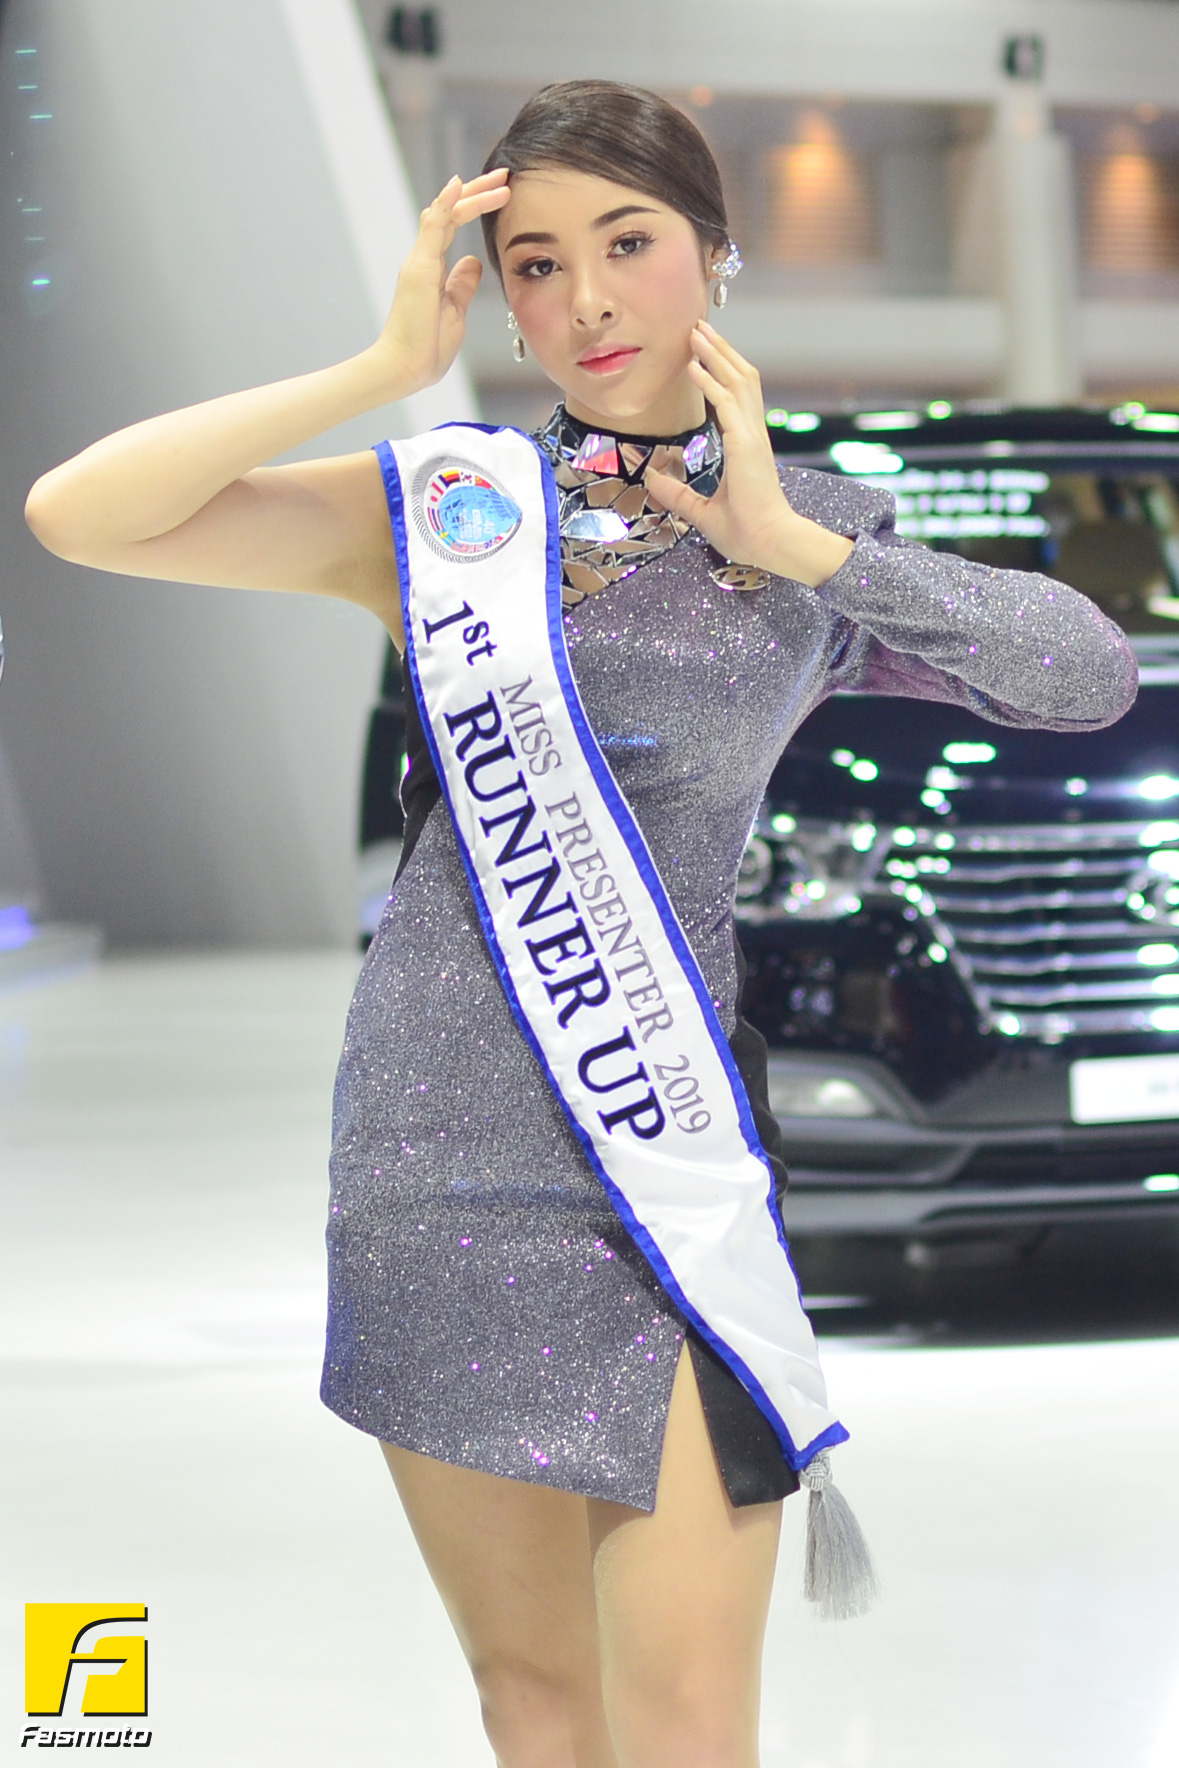 The Bangkok Motor Show 2019 - Show Girls - Hyundai